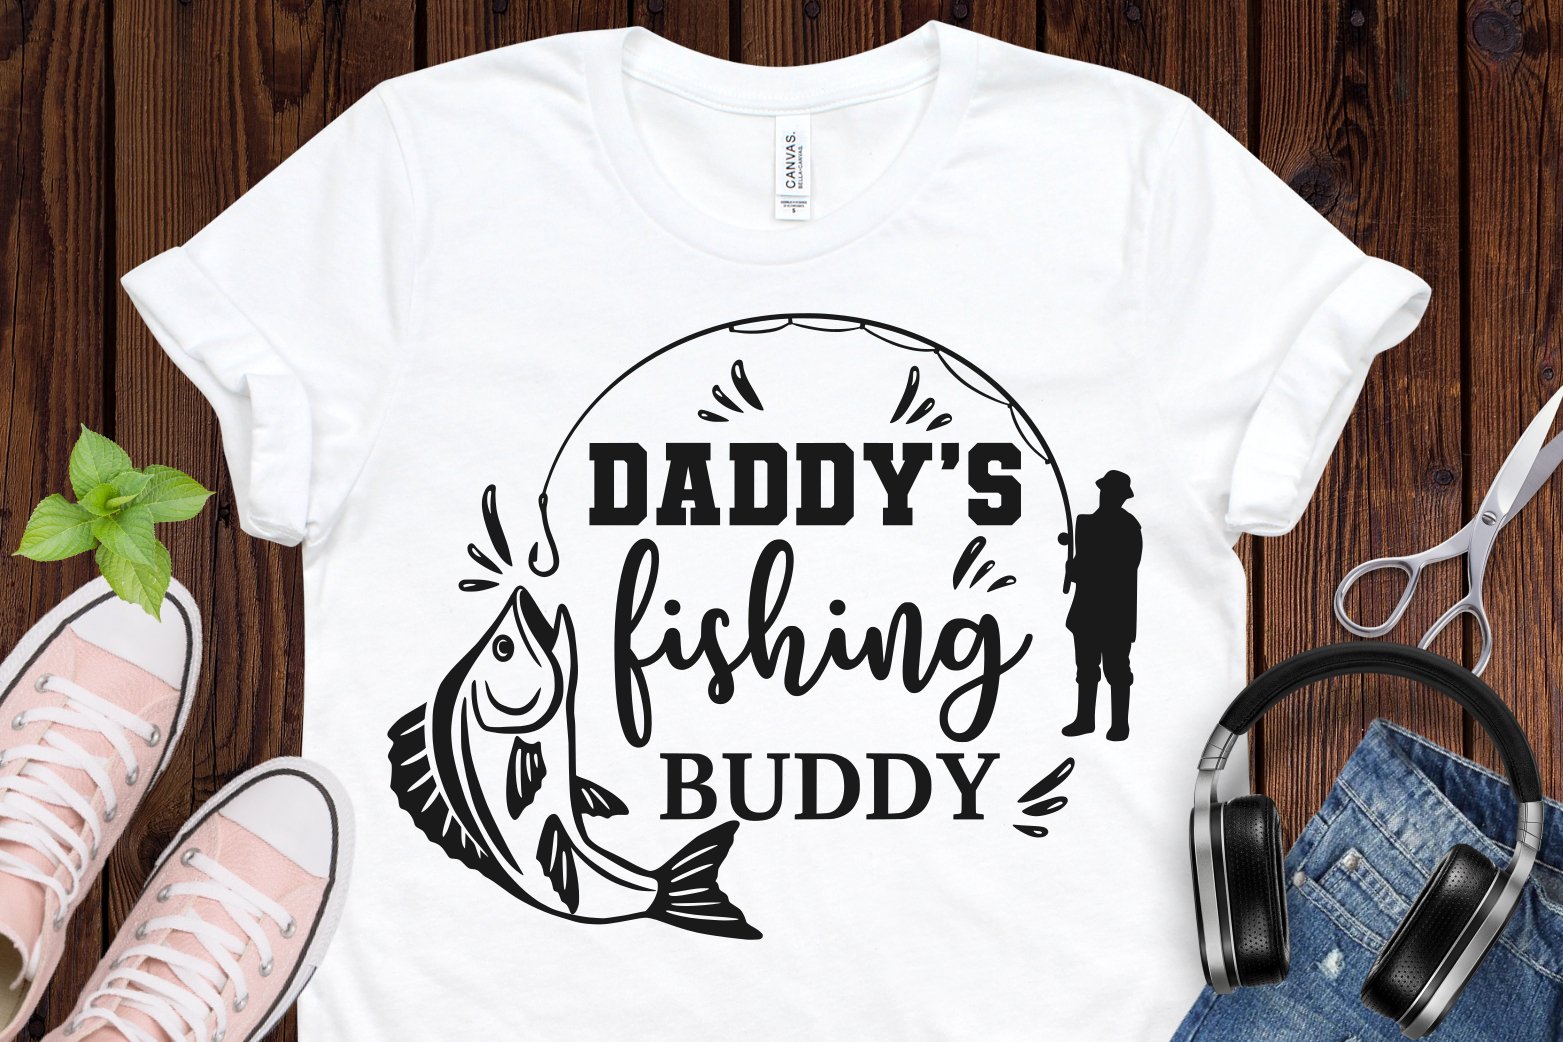 Daddy's fishing buddy.